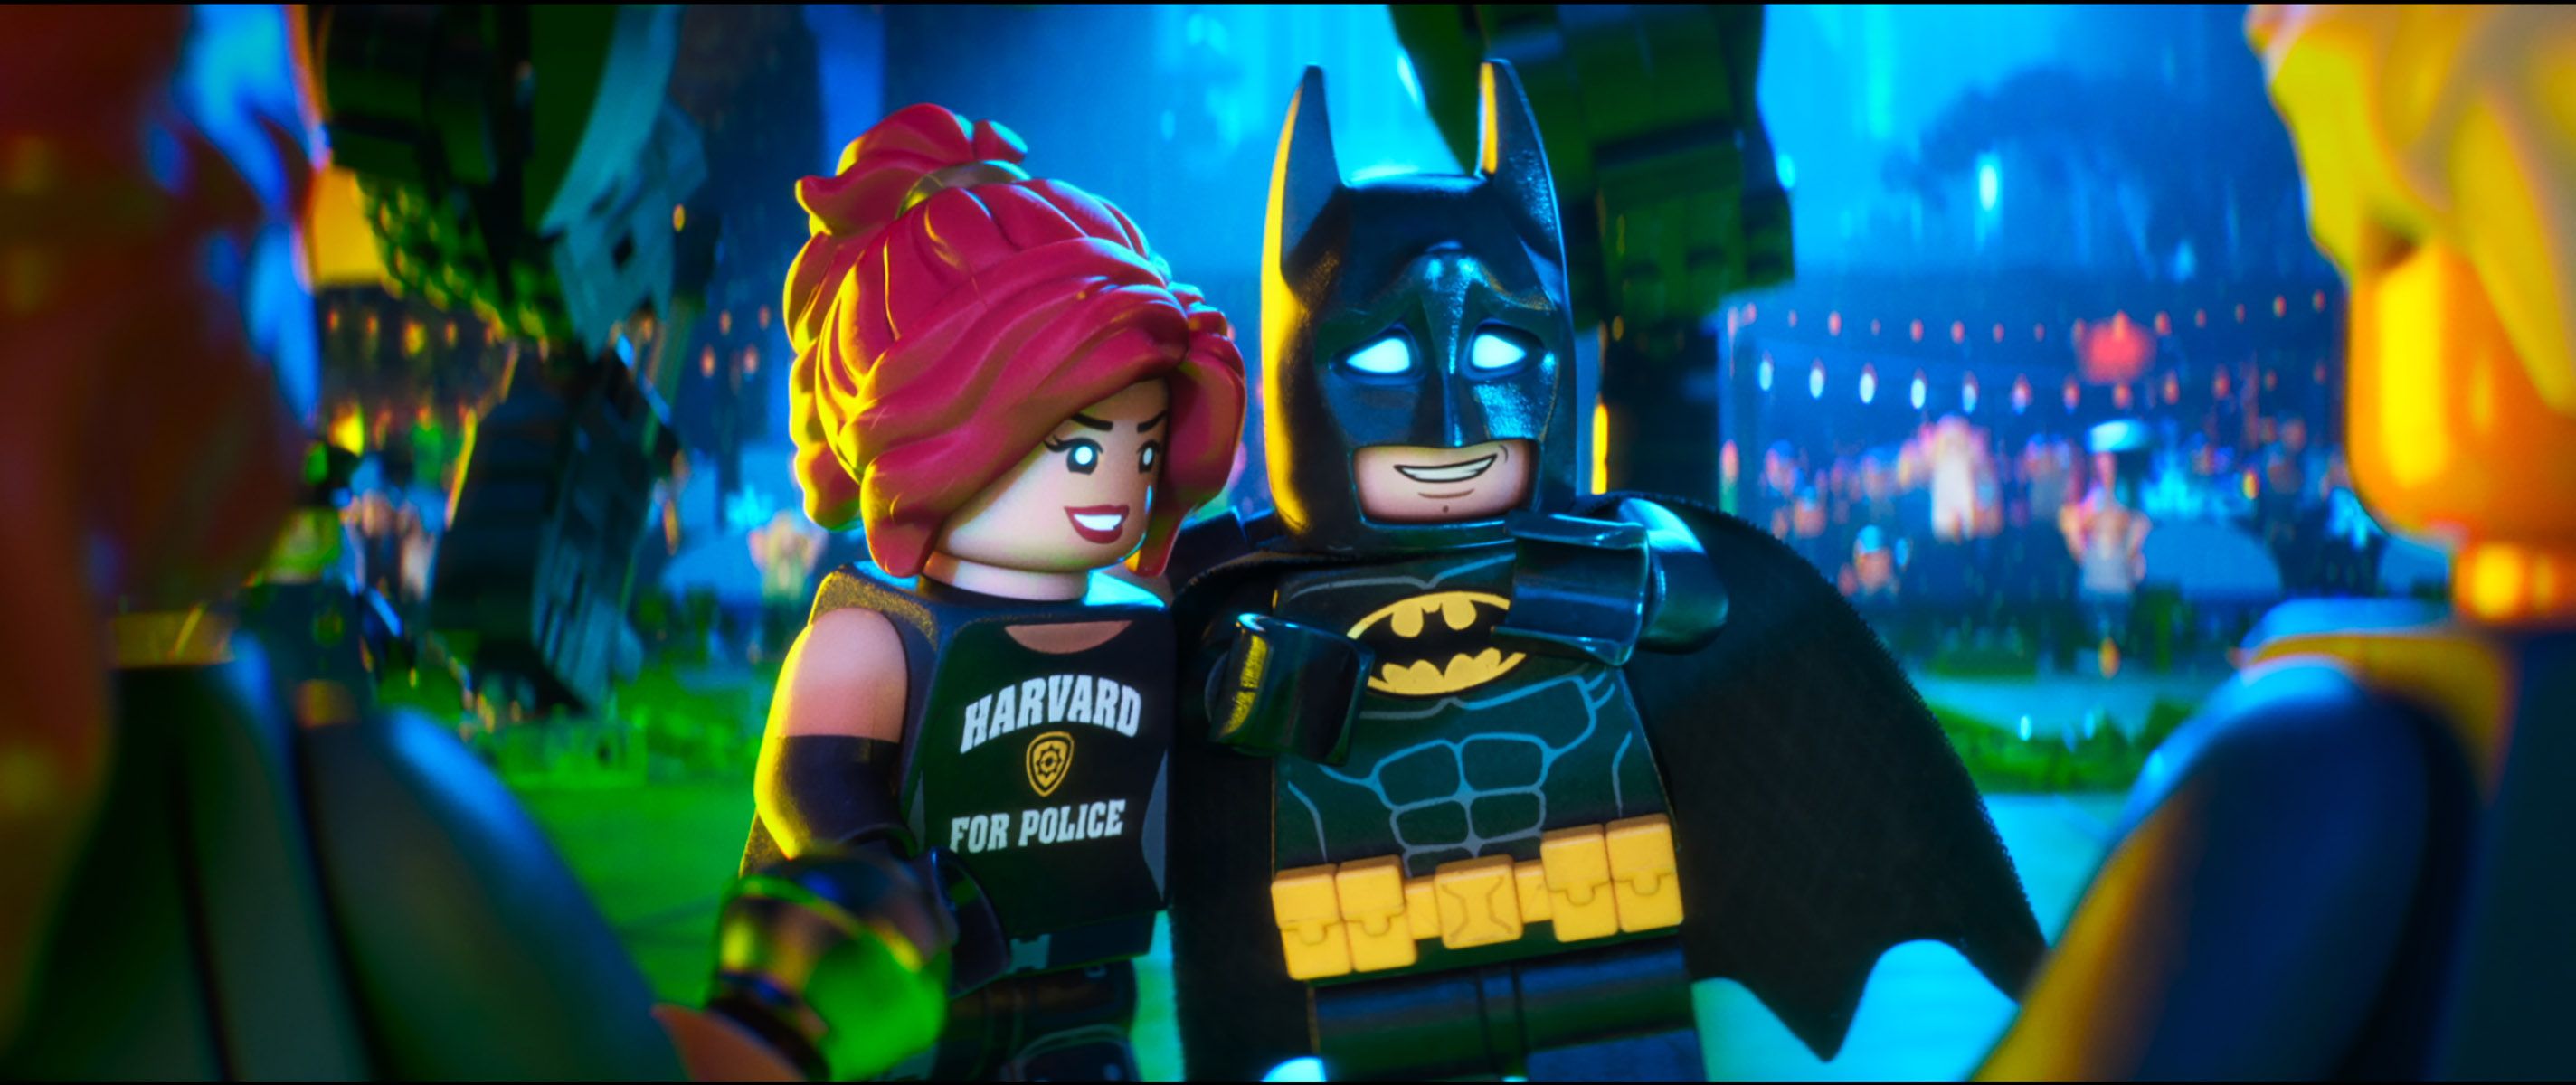 The LEGO Batman Movie Images: 29 Hi-Res Photos | Collider